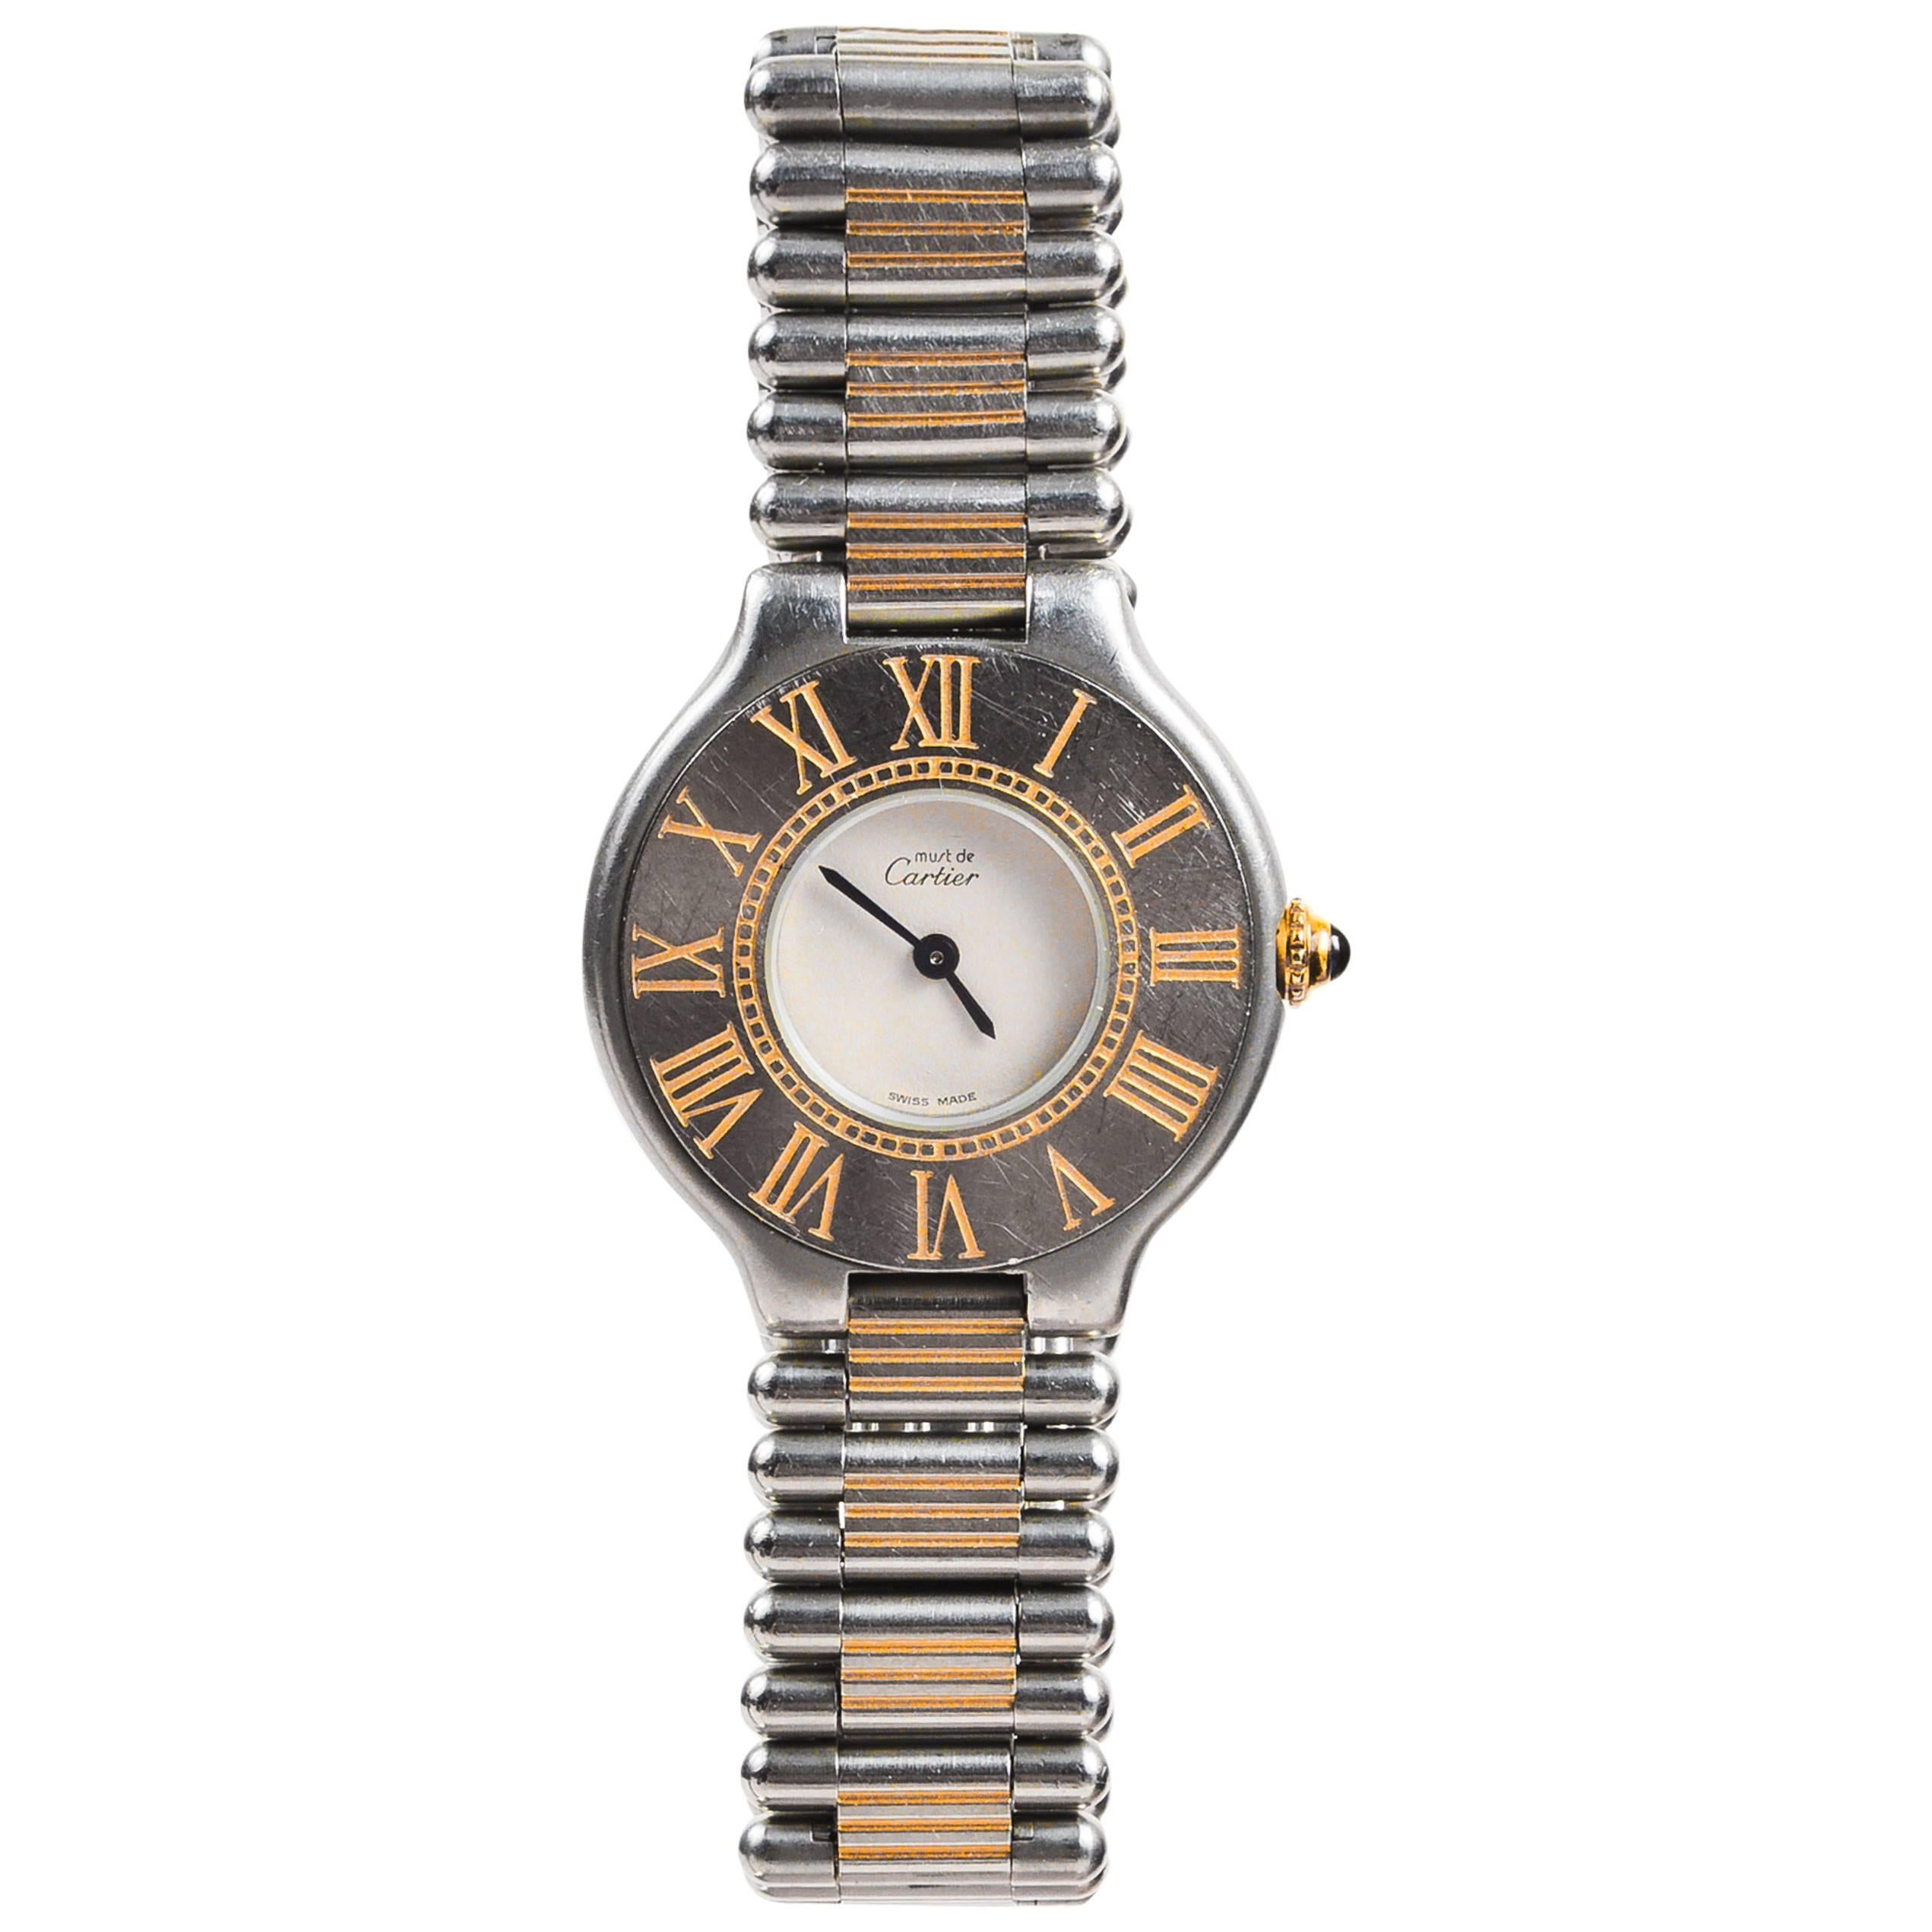 Vintage Cartier Stainless Steel 18k Gold "Must de Cartier" Roman Numeral Watch For Sale